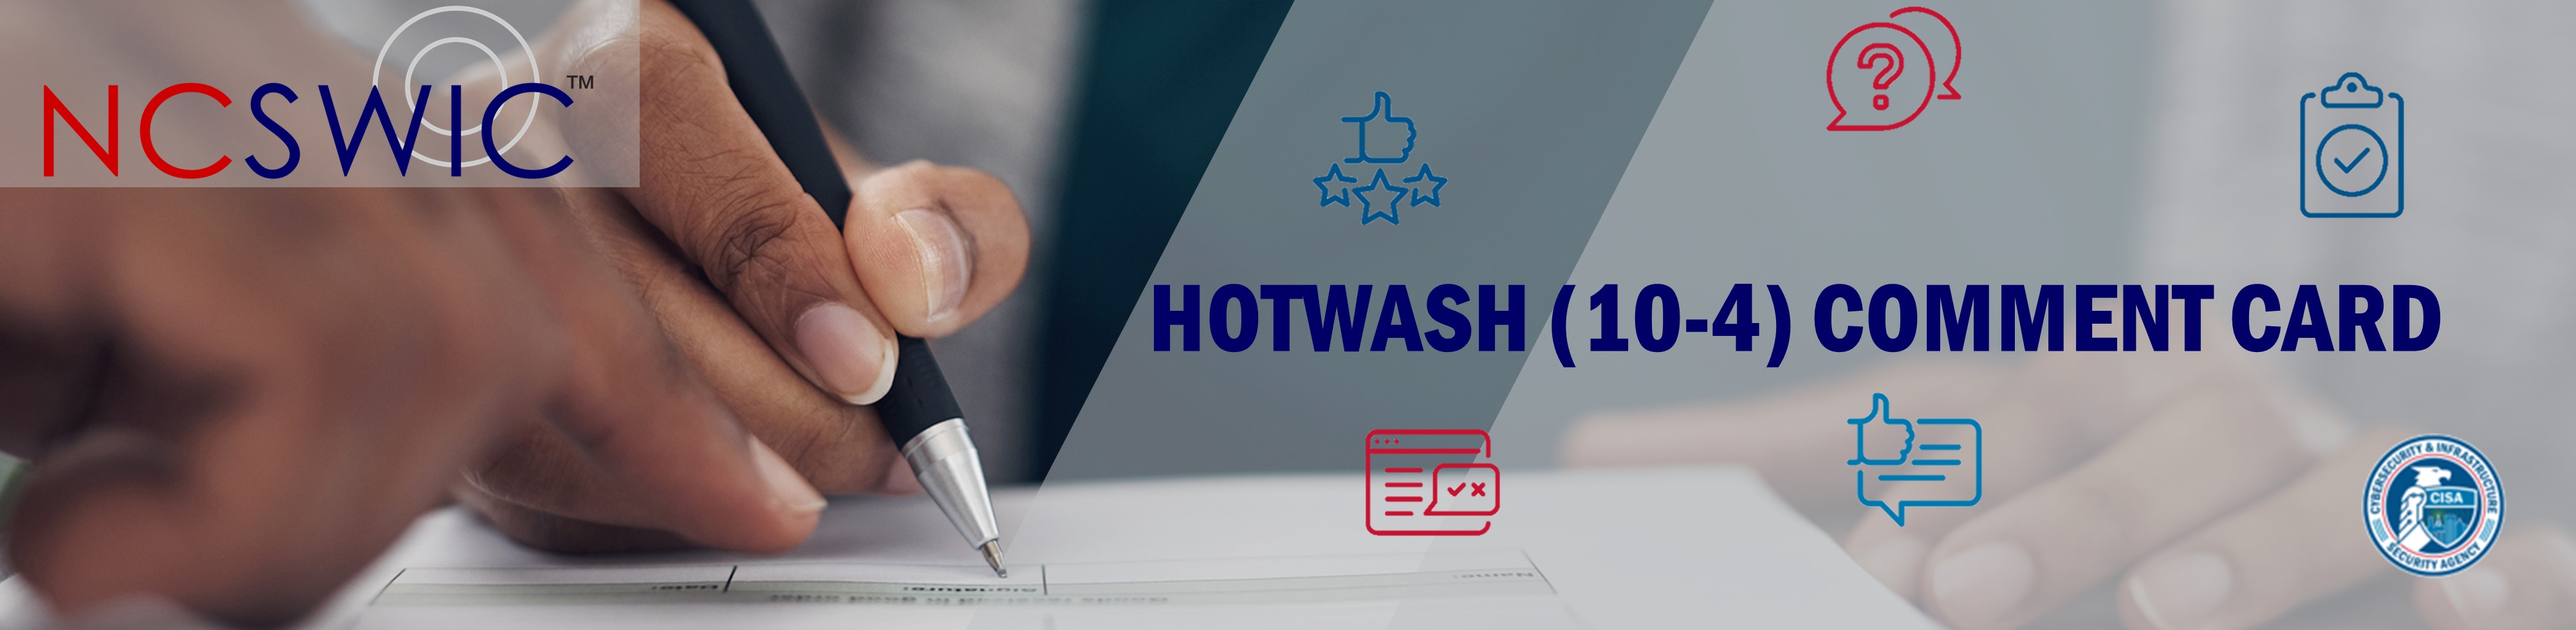 NCSWIC. Hotwash (10-4) Comment Card